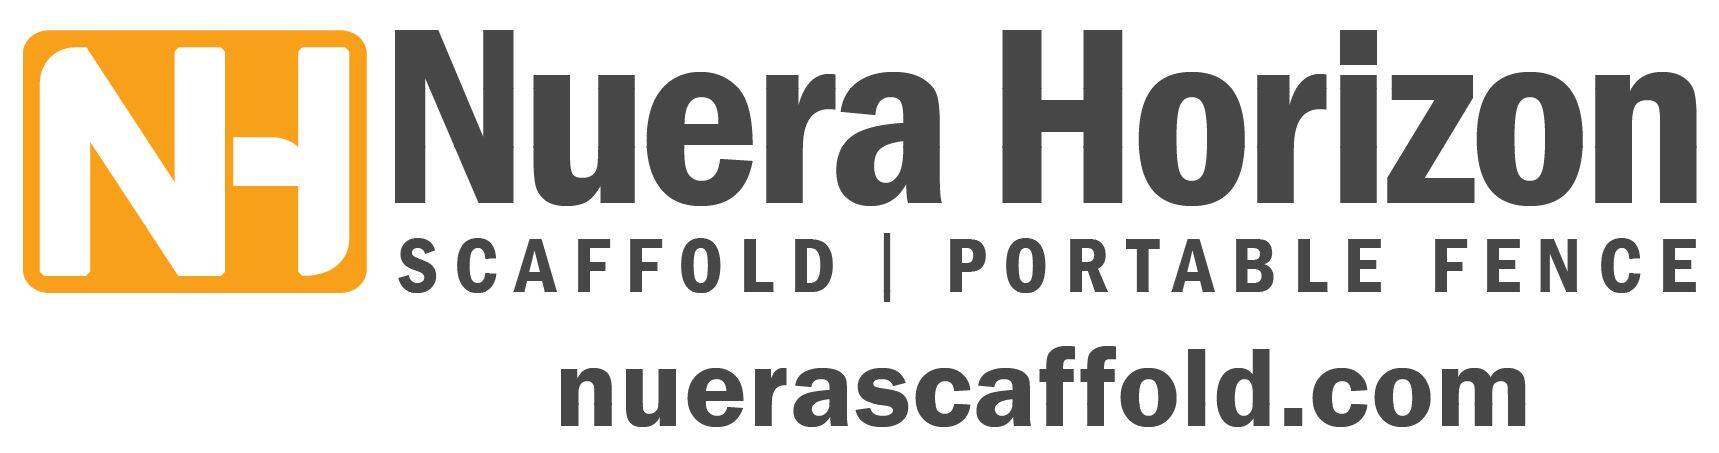 Nuera Horizon Scaffold | Portable Fence